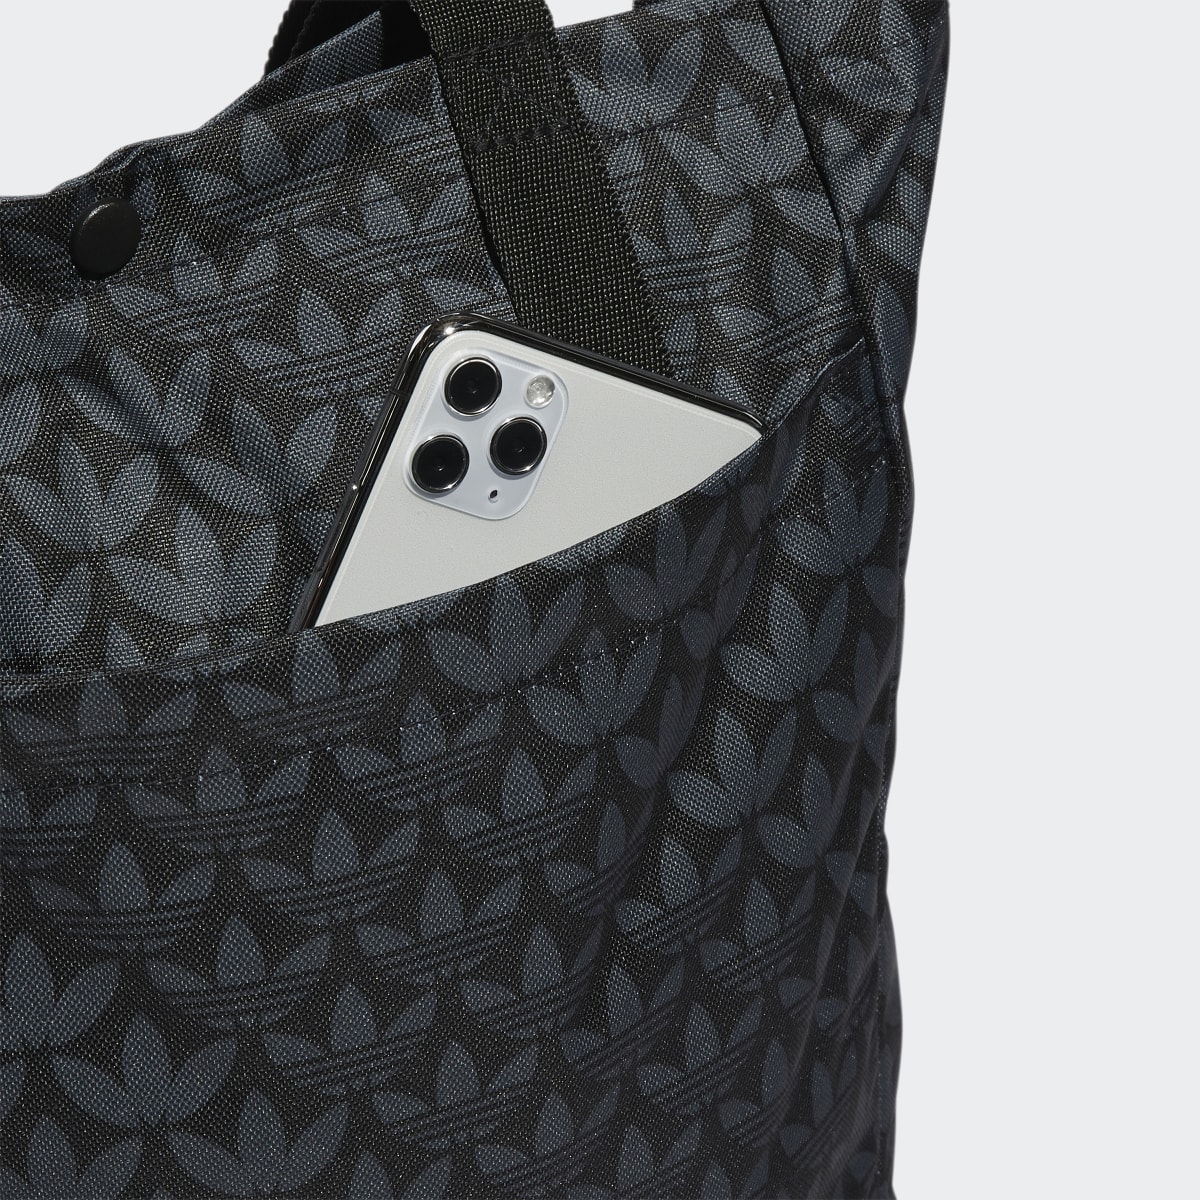 Adidas Simple Tote Bag. 7